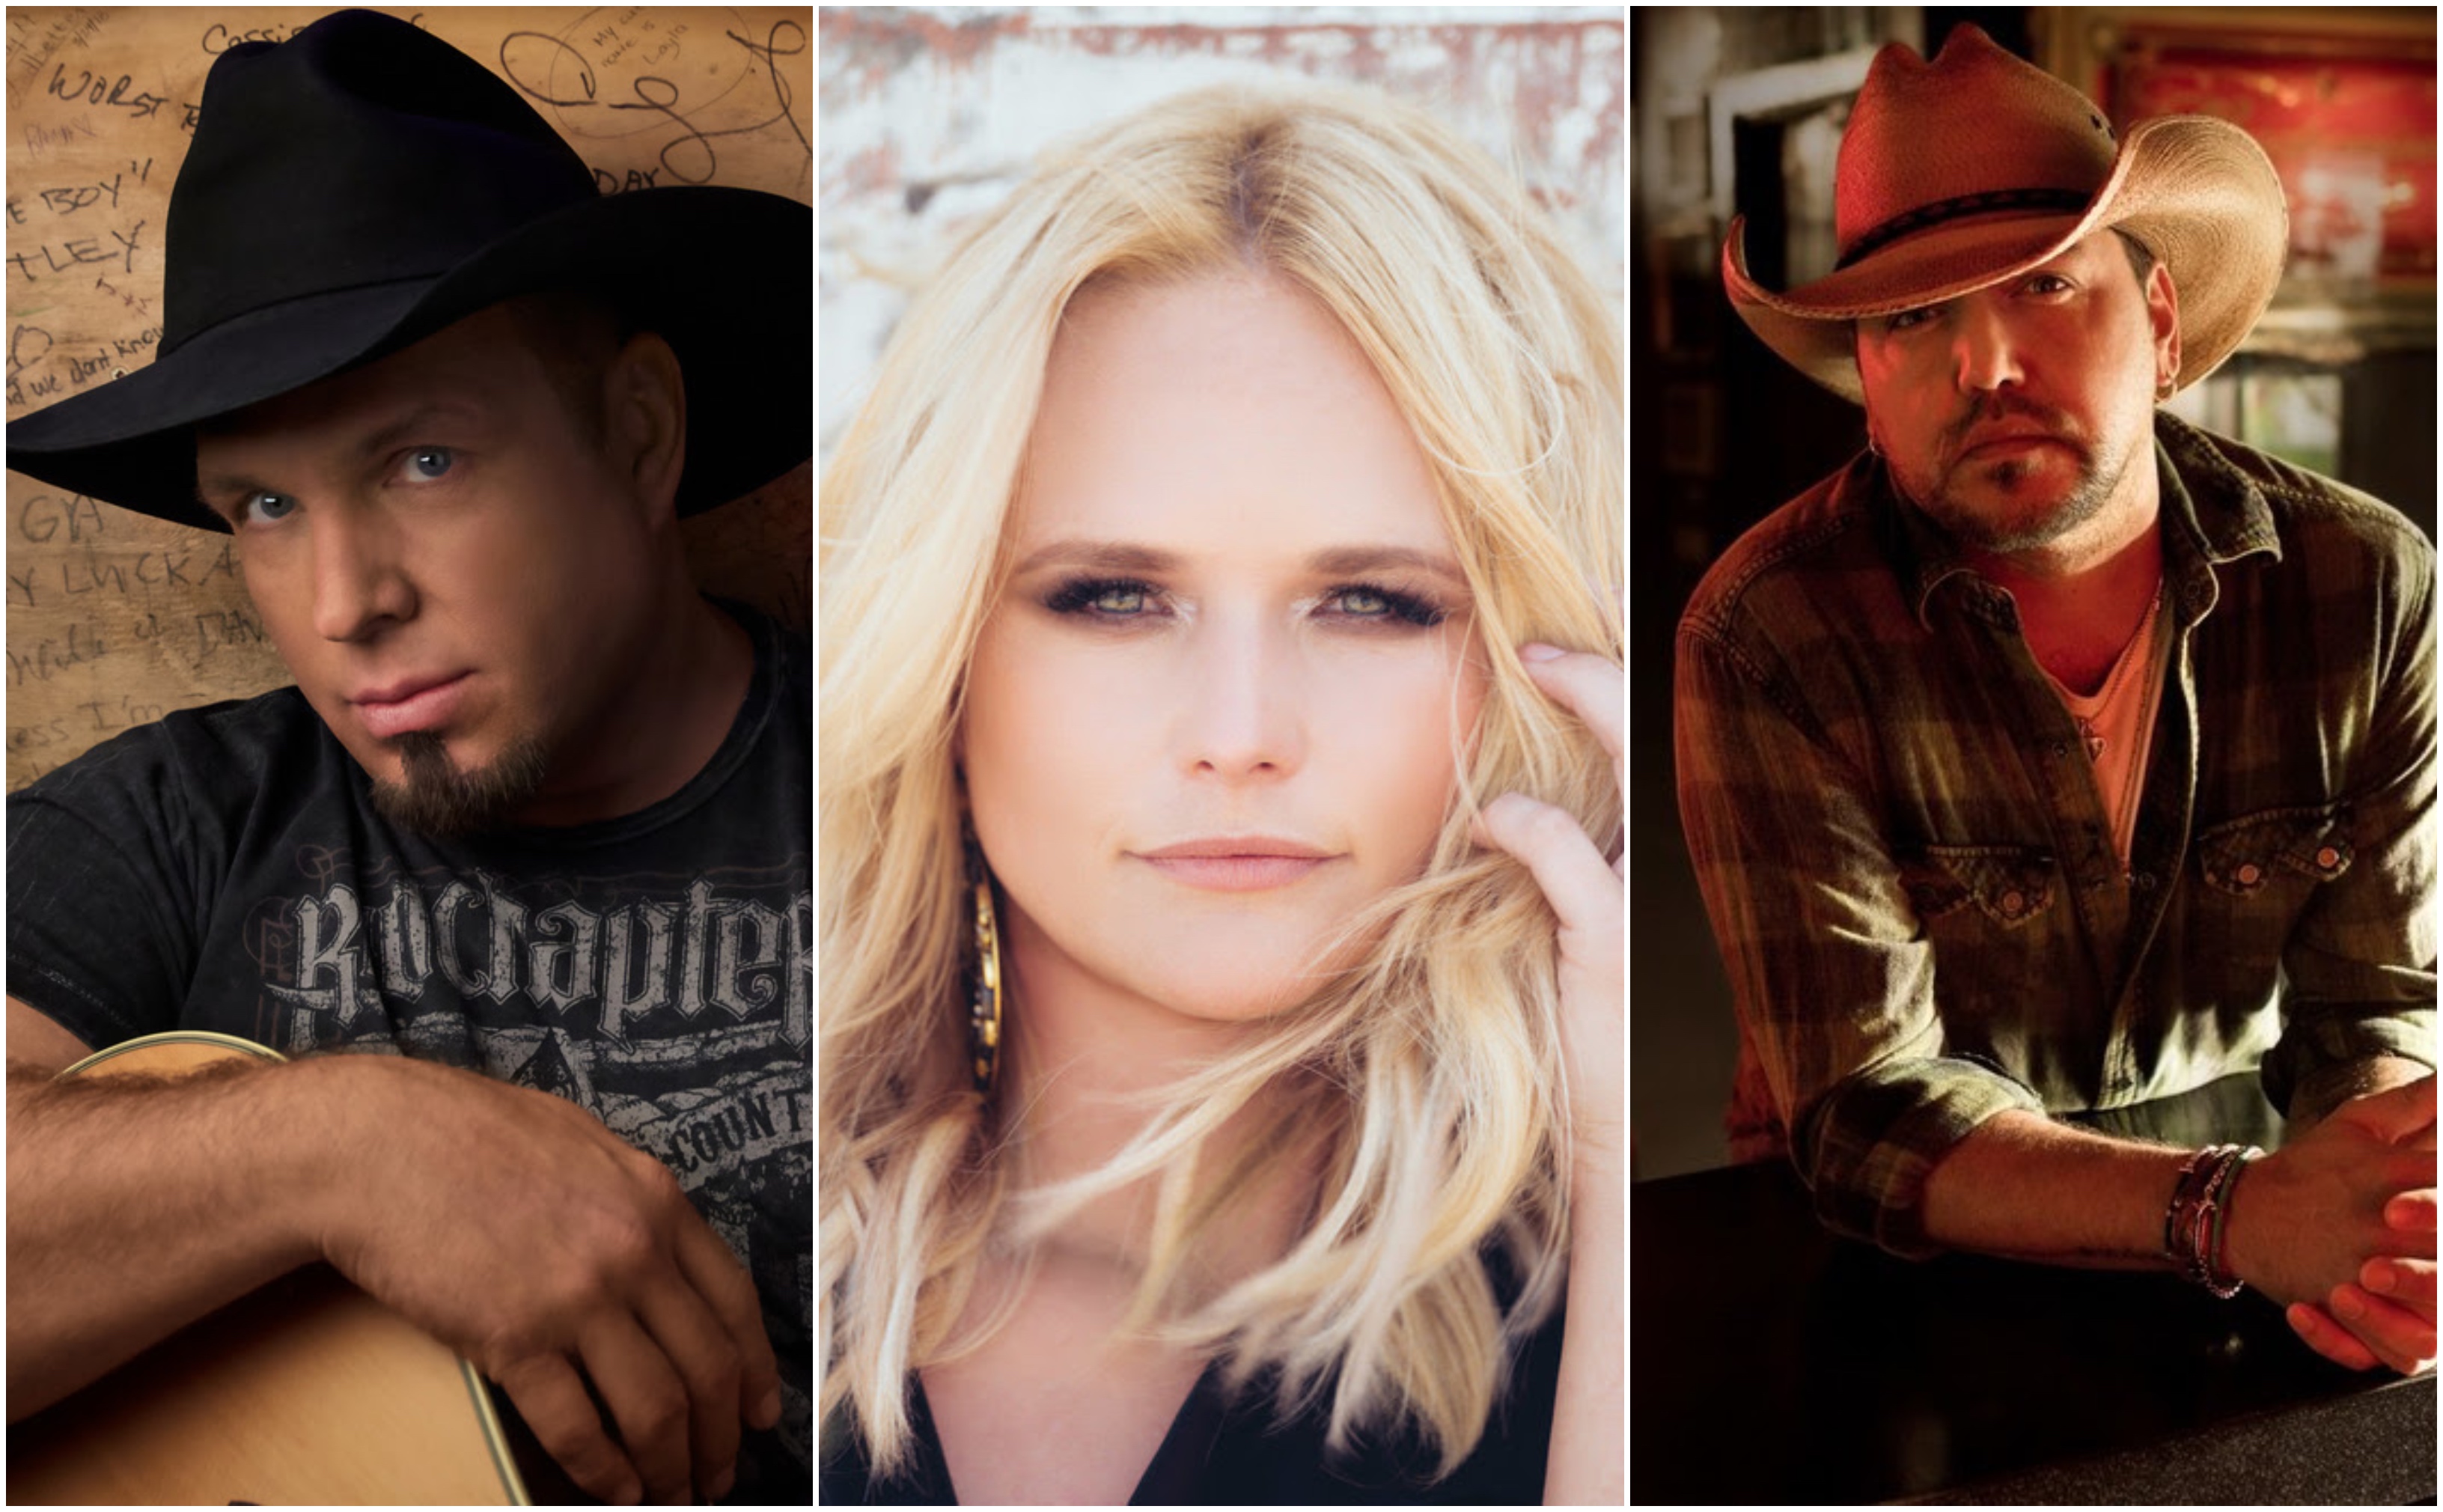 Jason Aldean, Garth Brooks, Miranda Lambert Among Newly Announced Performers for 2018 CMA Awards